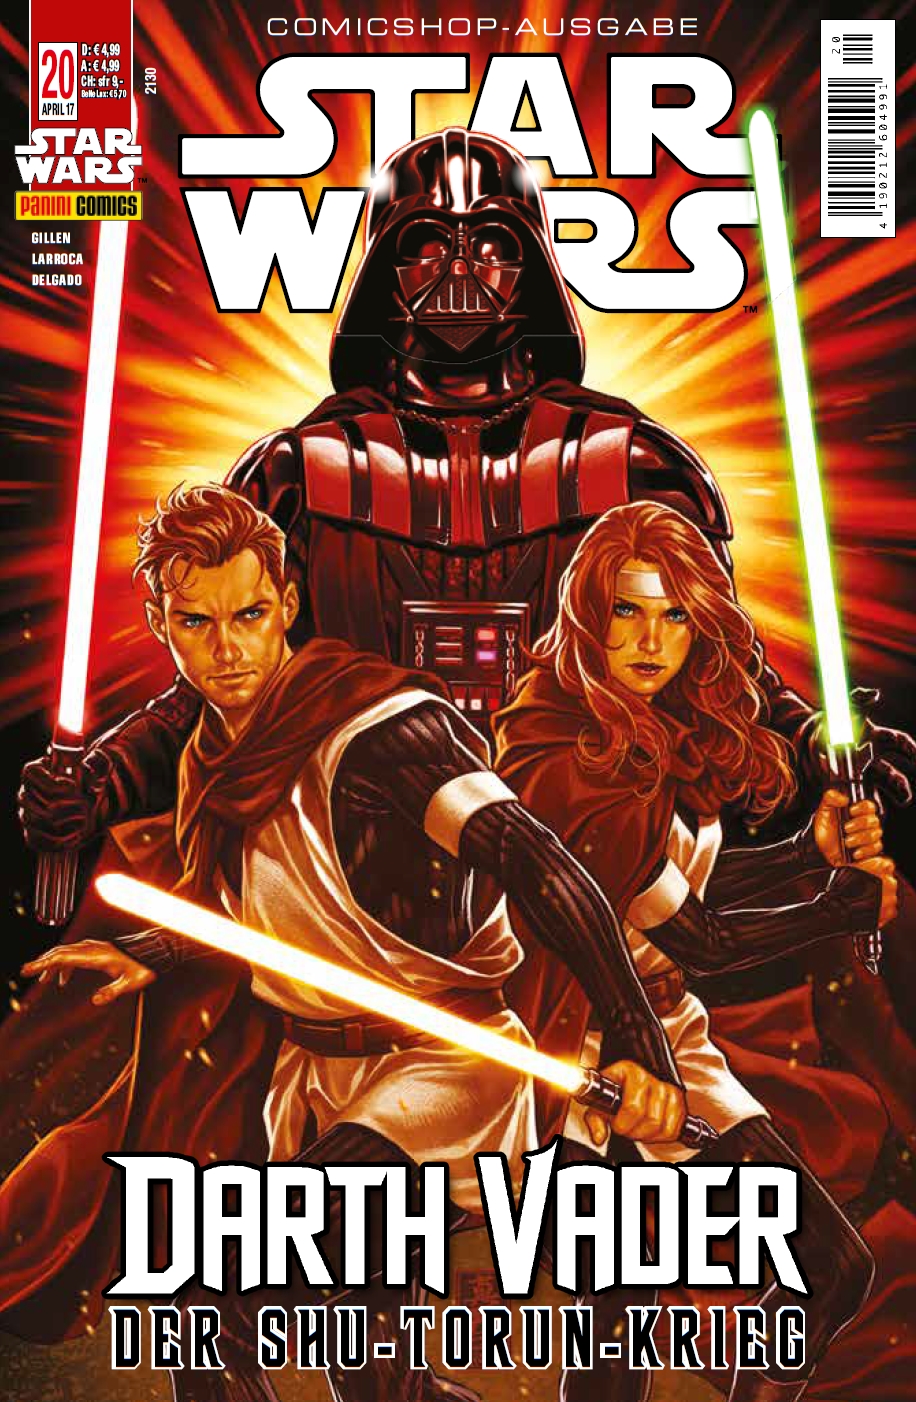 Star Wars #20 (Comicshop-Ausgabe) (22.03.2017)